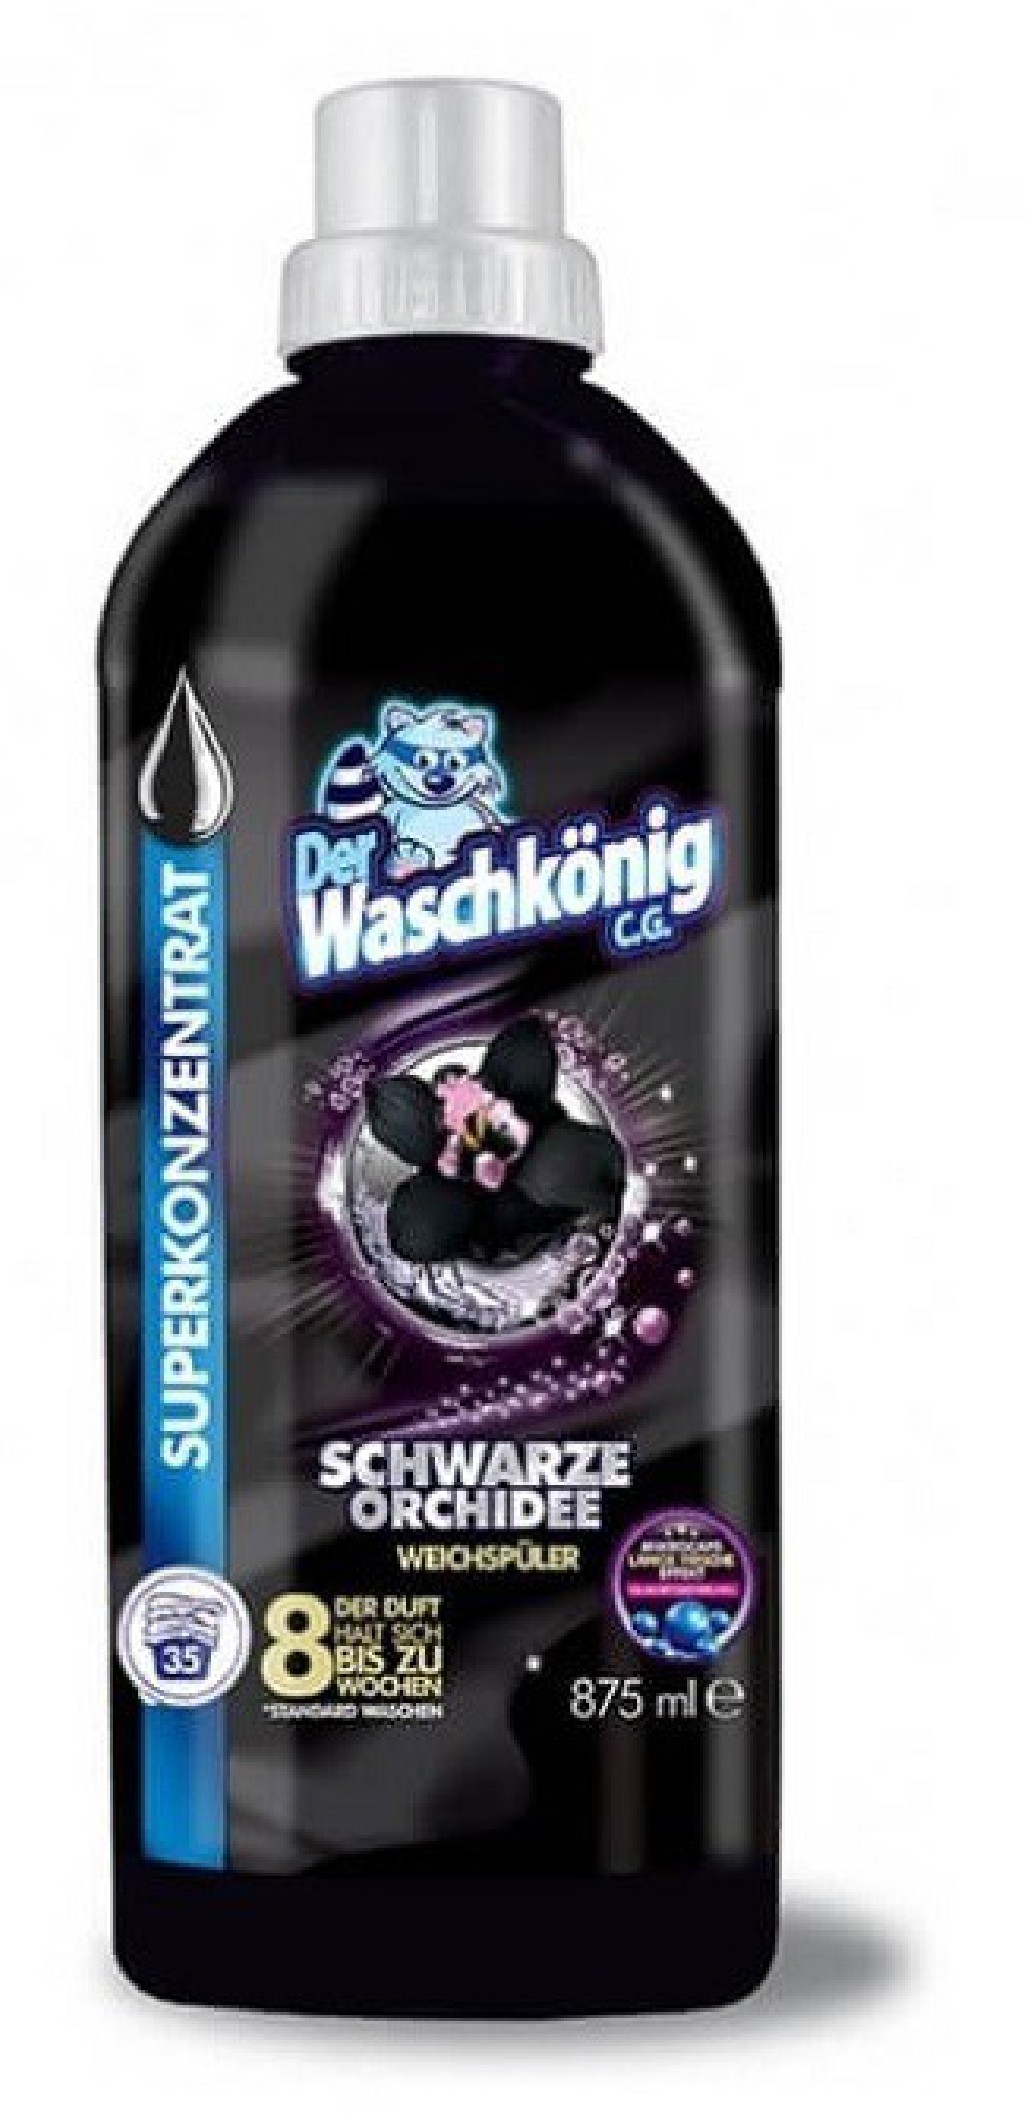 Waschkönig Płyn do płukania 875 ml Orchidee